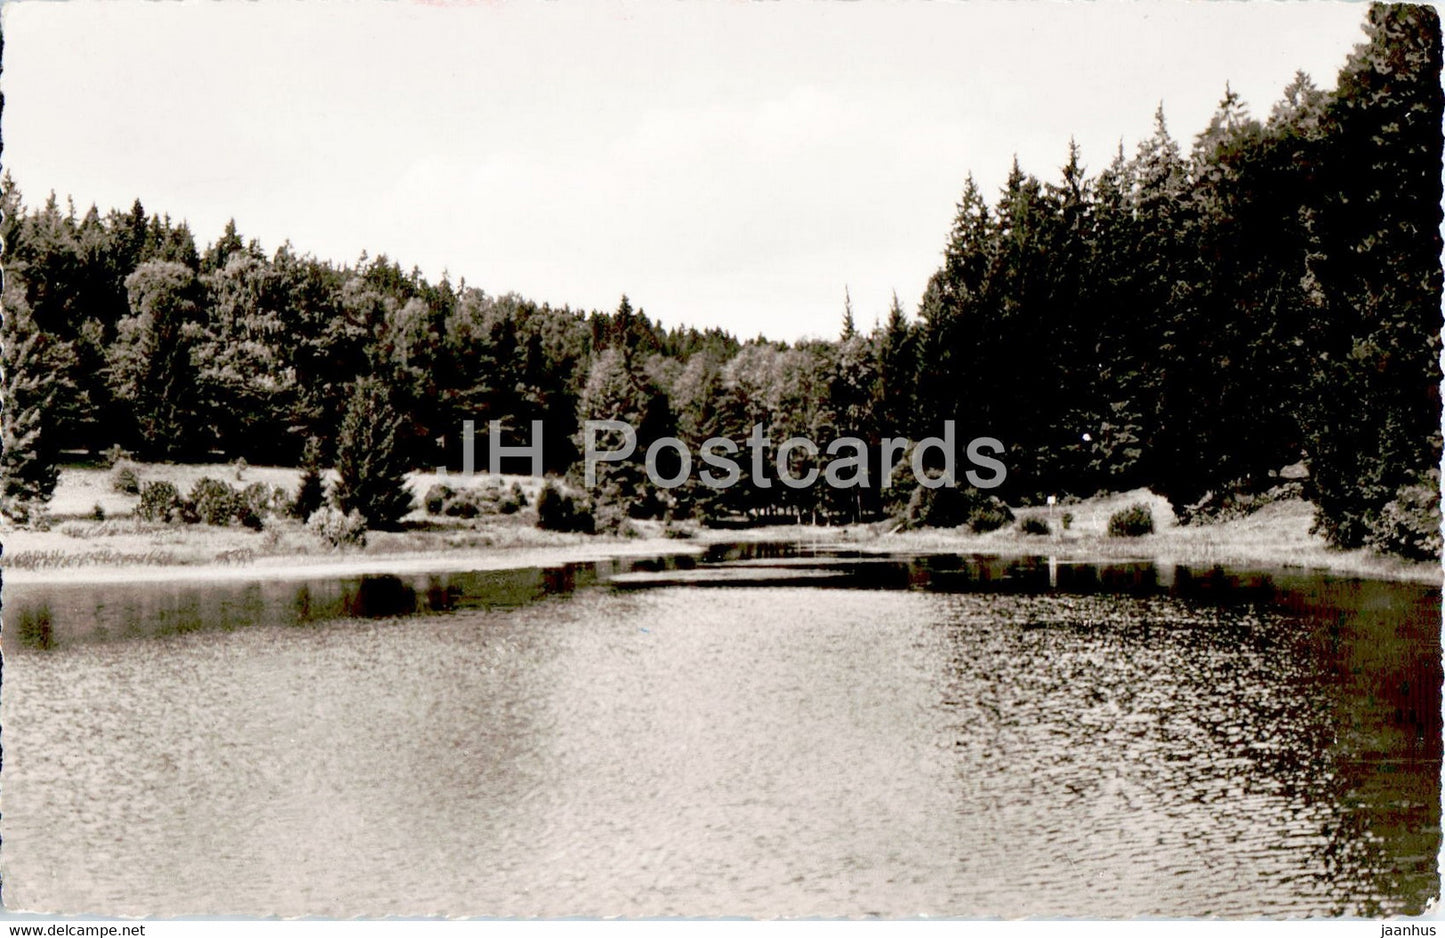 Neuhaus im Solling - Lakenhaus Teich - old postcard - 1958 - Germany - used - JH Postcards